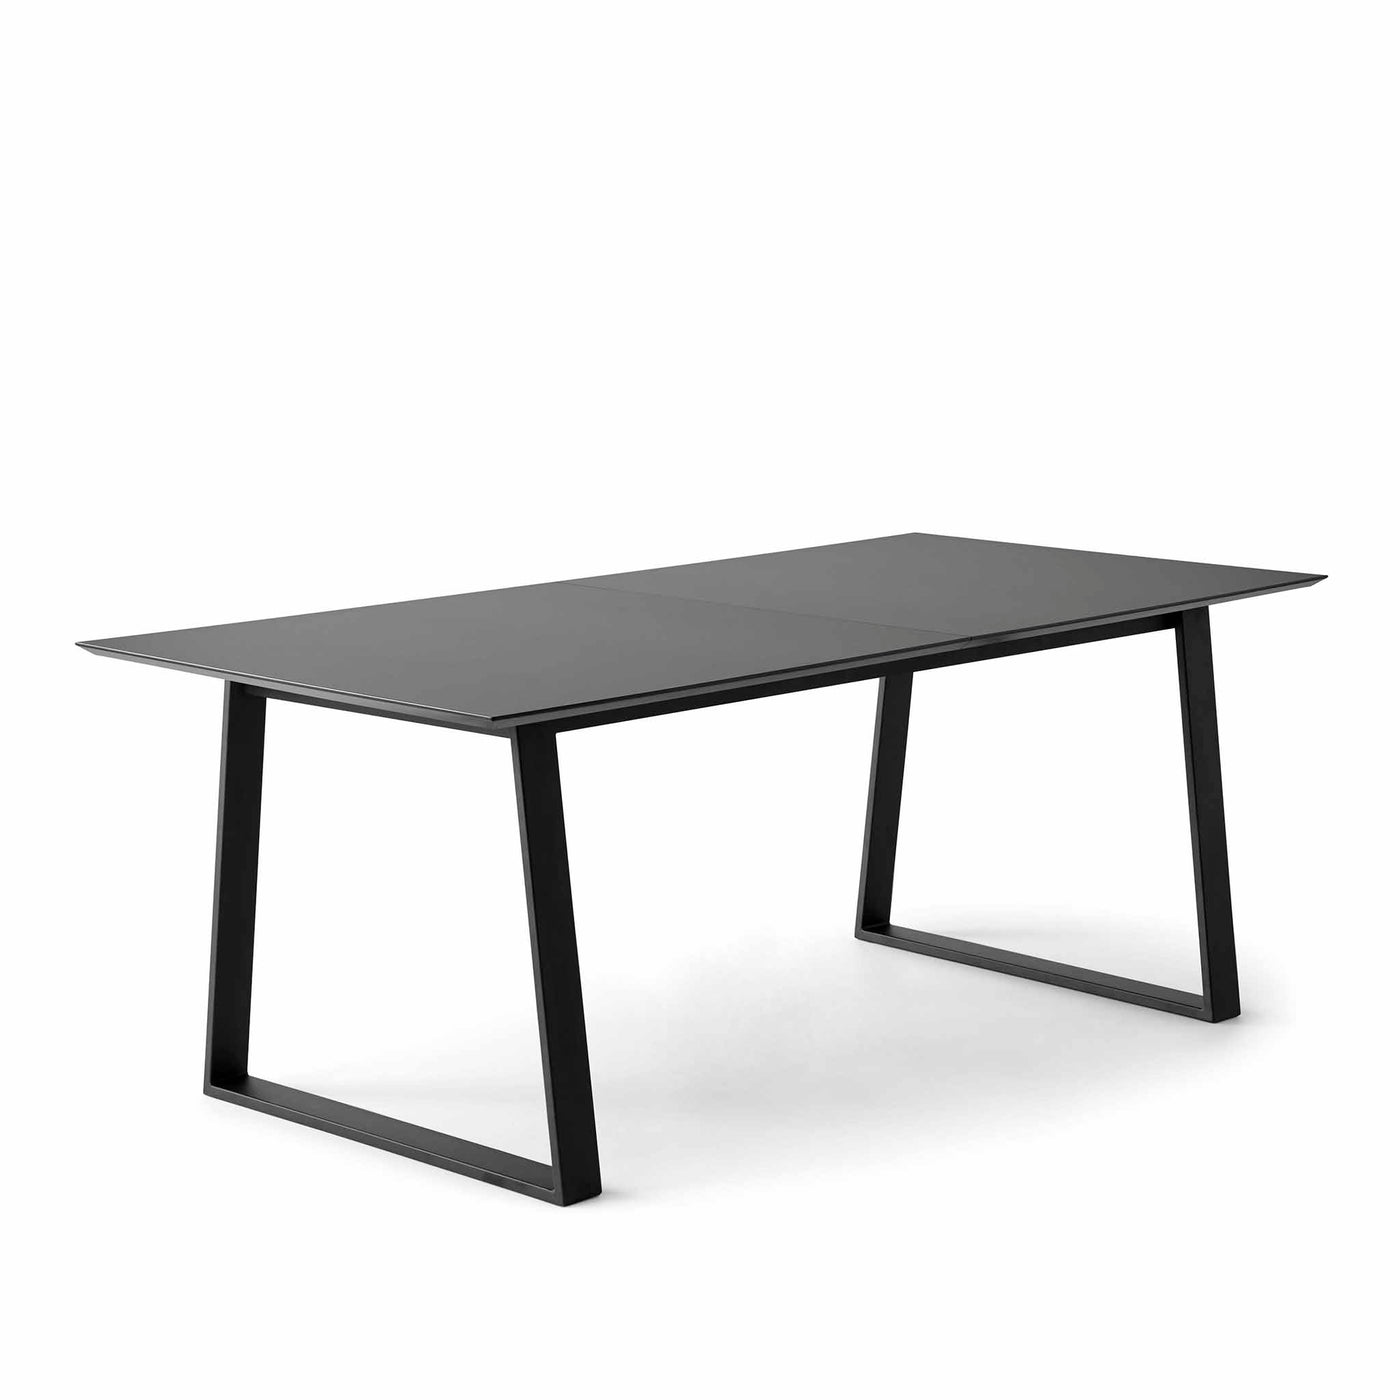 Meza by Hammel Square spisebord med bordplade i sort nano laminat og sort pulverlakeret metal trapez stel.